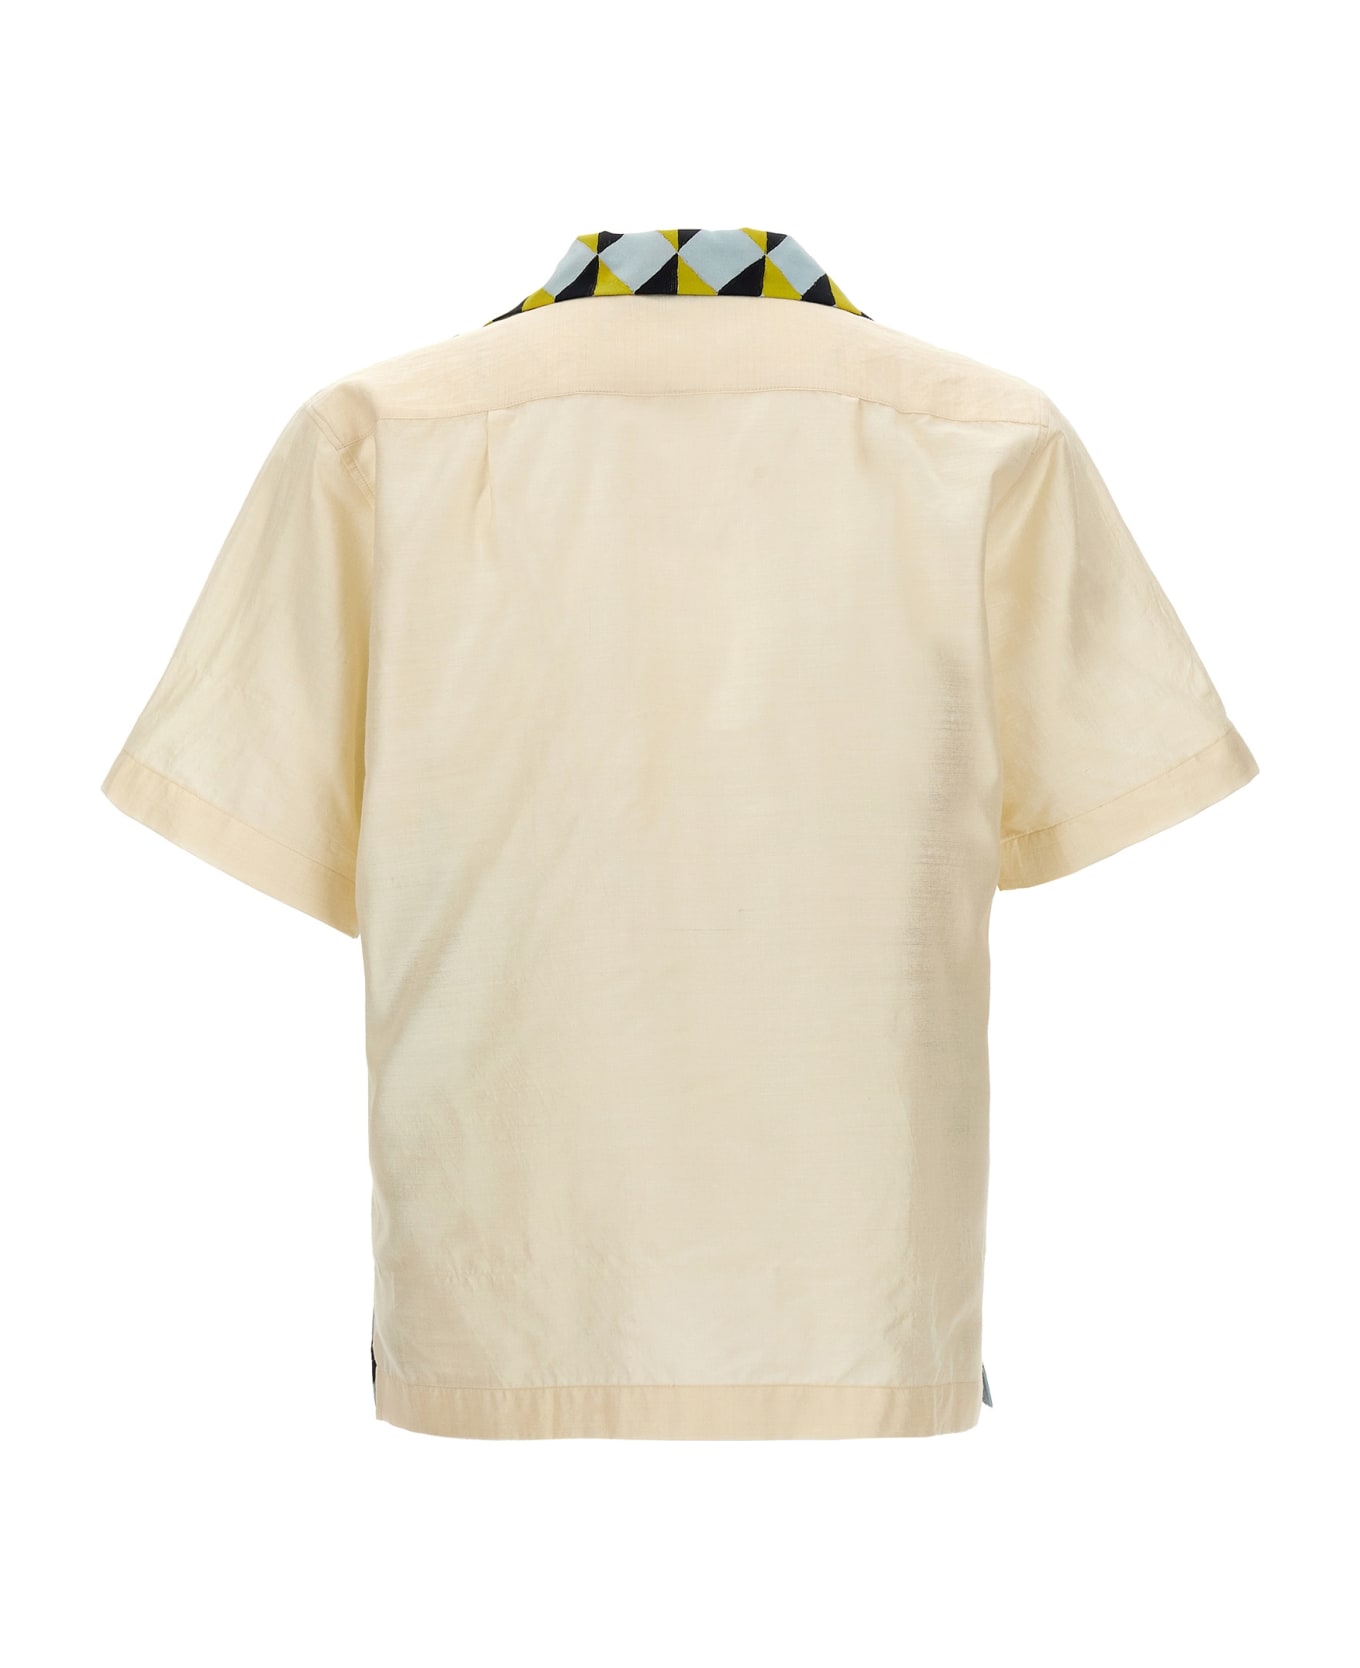 Wales Bonner 'birdsong' Shirt - Multicolor シャツ